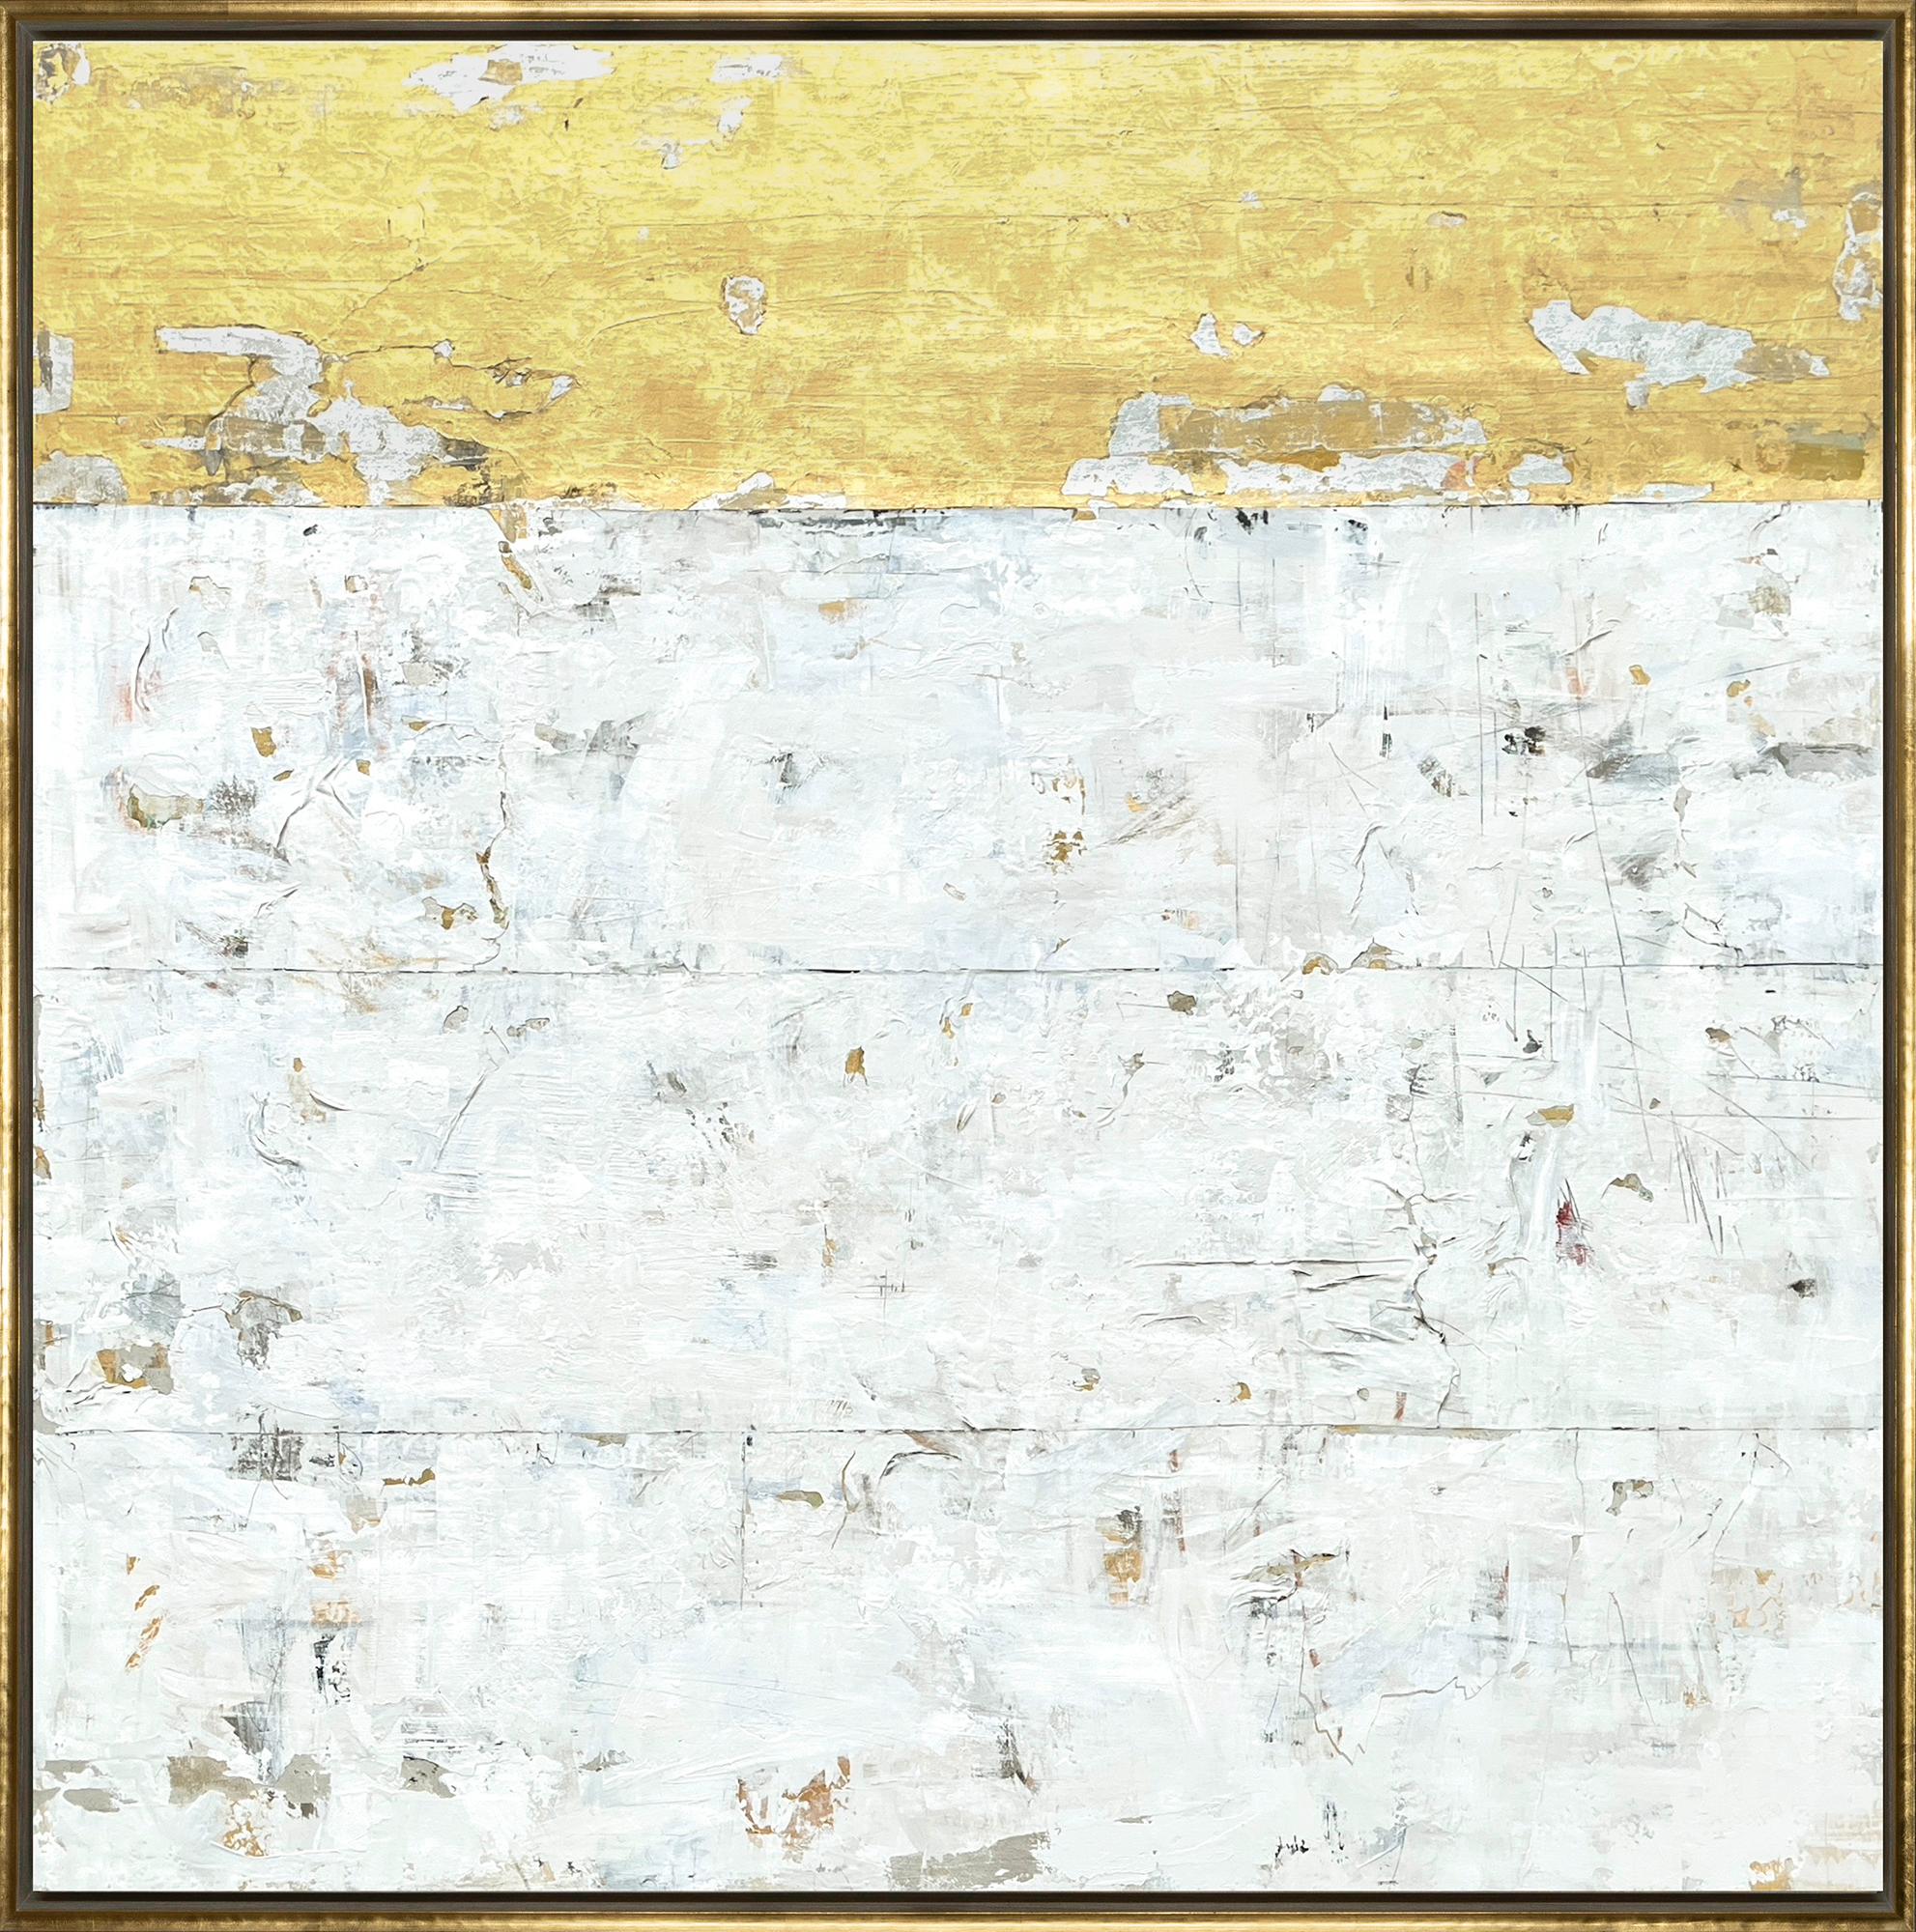 "Gold and Color No. 129" Toile mixte contemporaine de grande taille encadrée - Mixed Media Art de Takefumi Hori